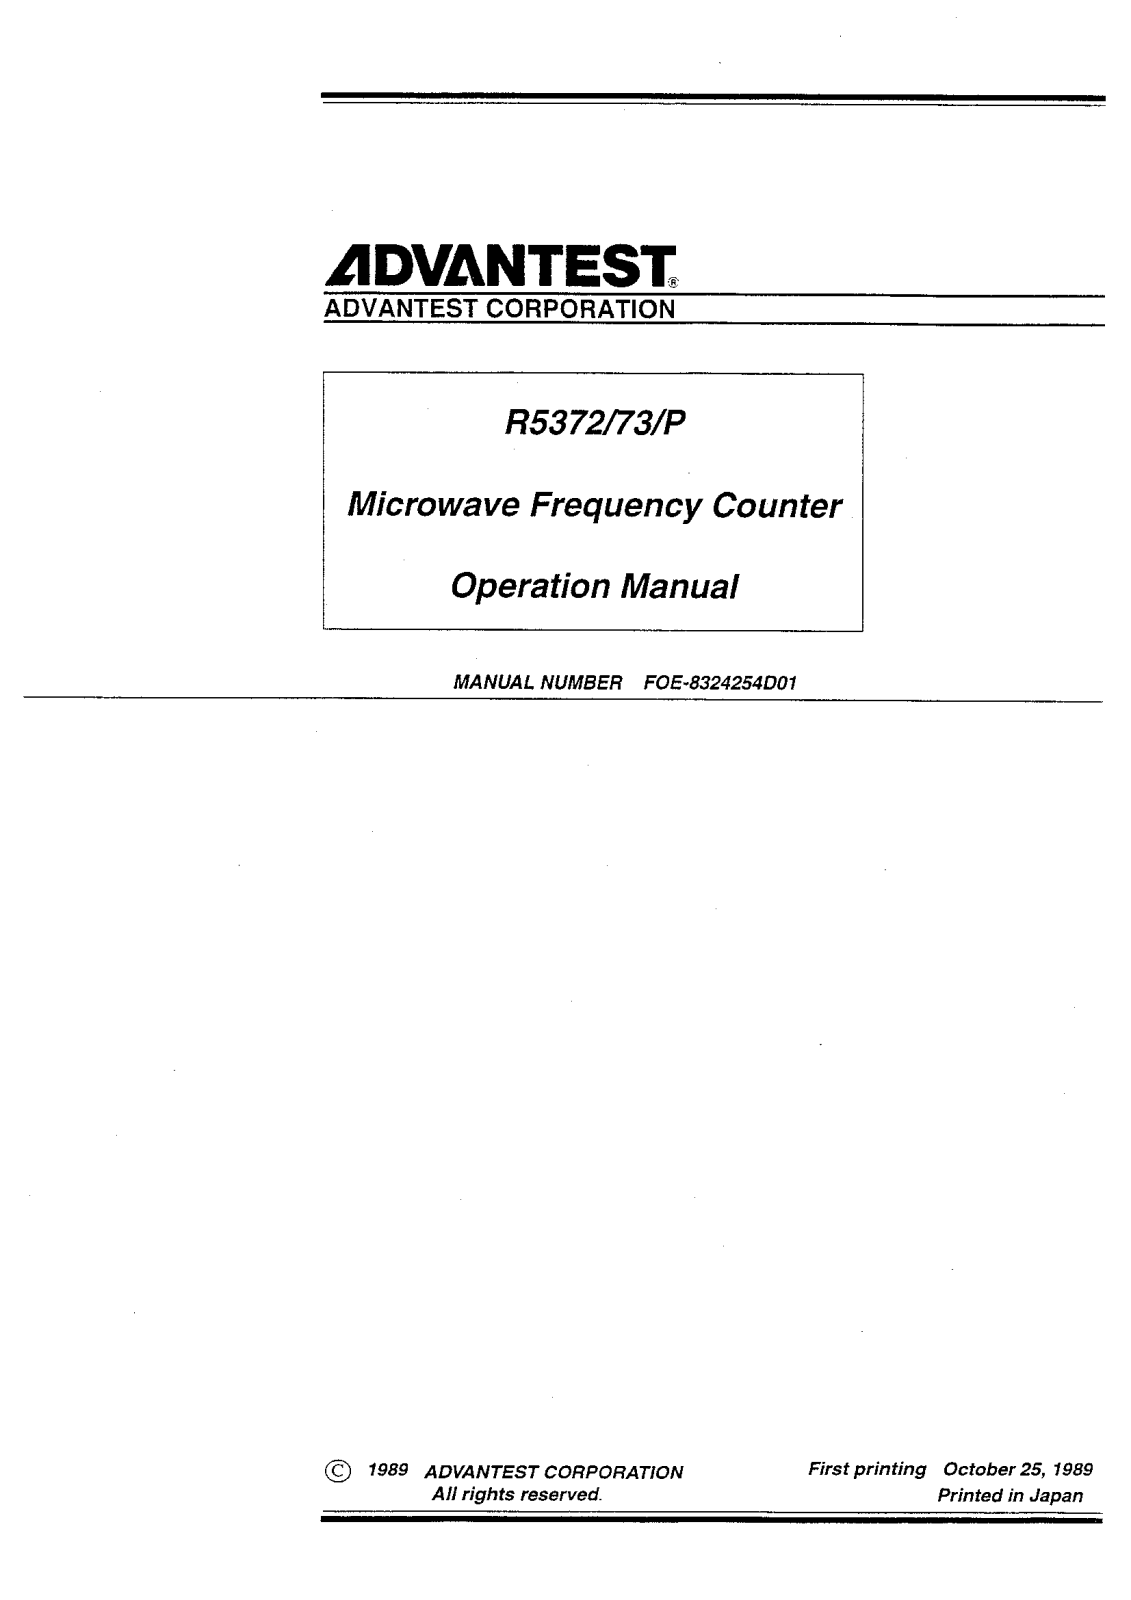 Advantest Corporation R5373, R5372 User Manual